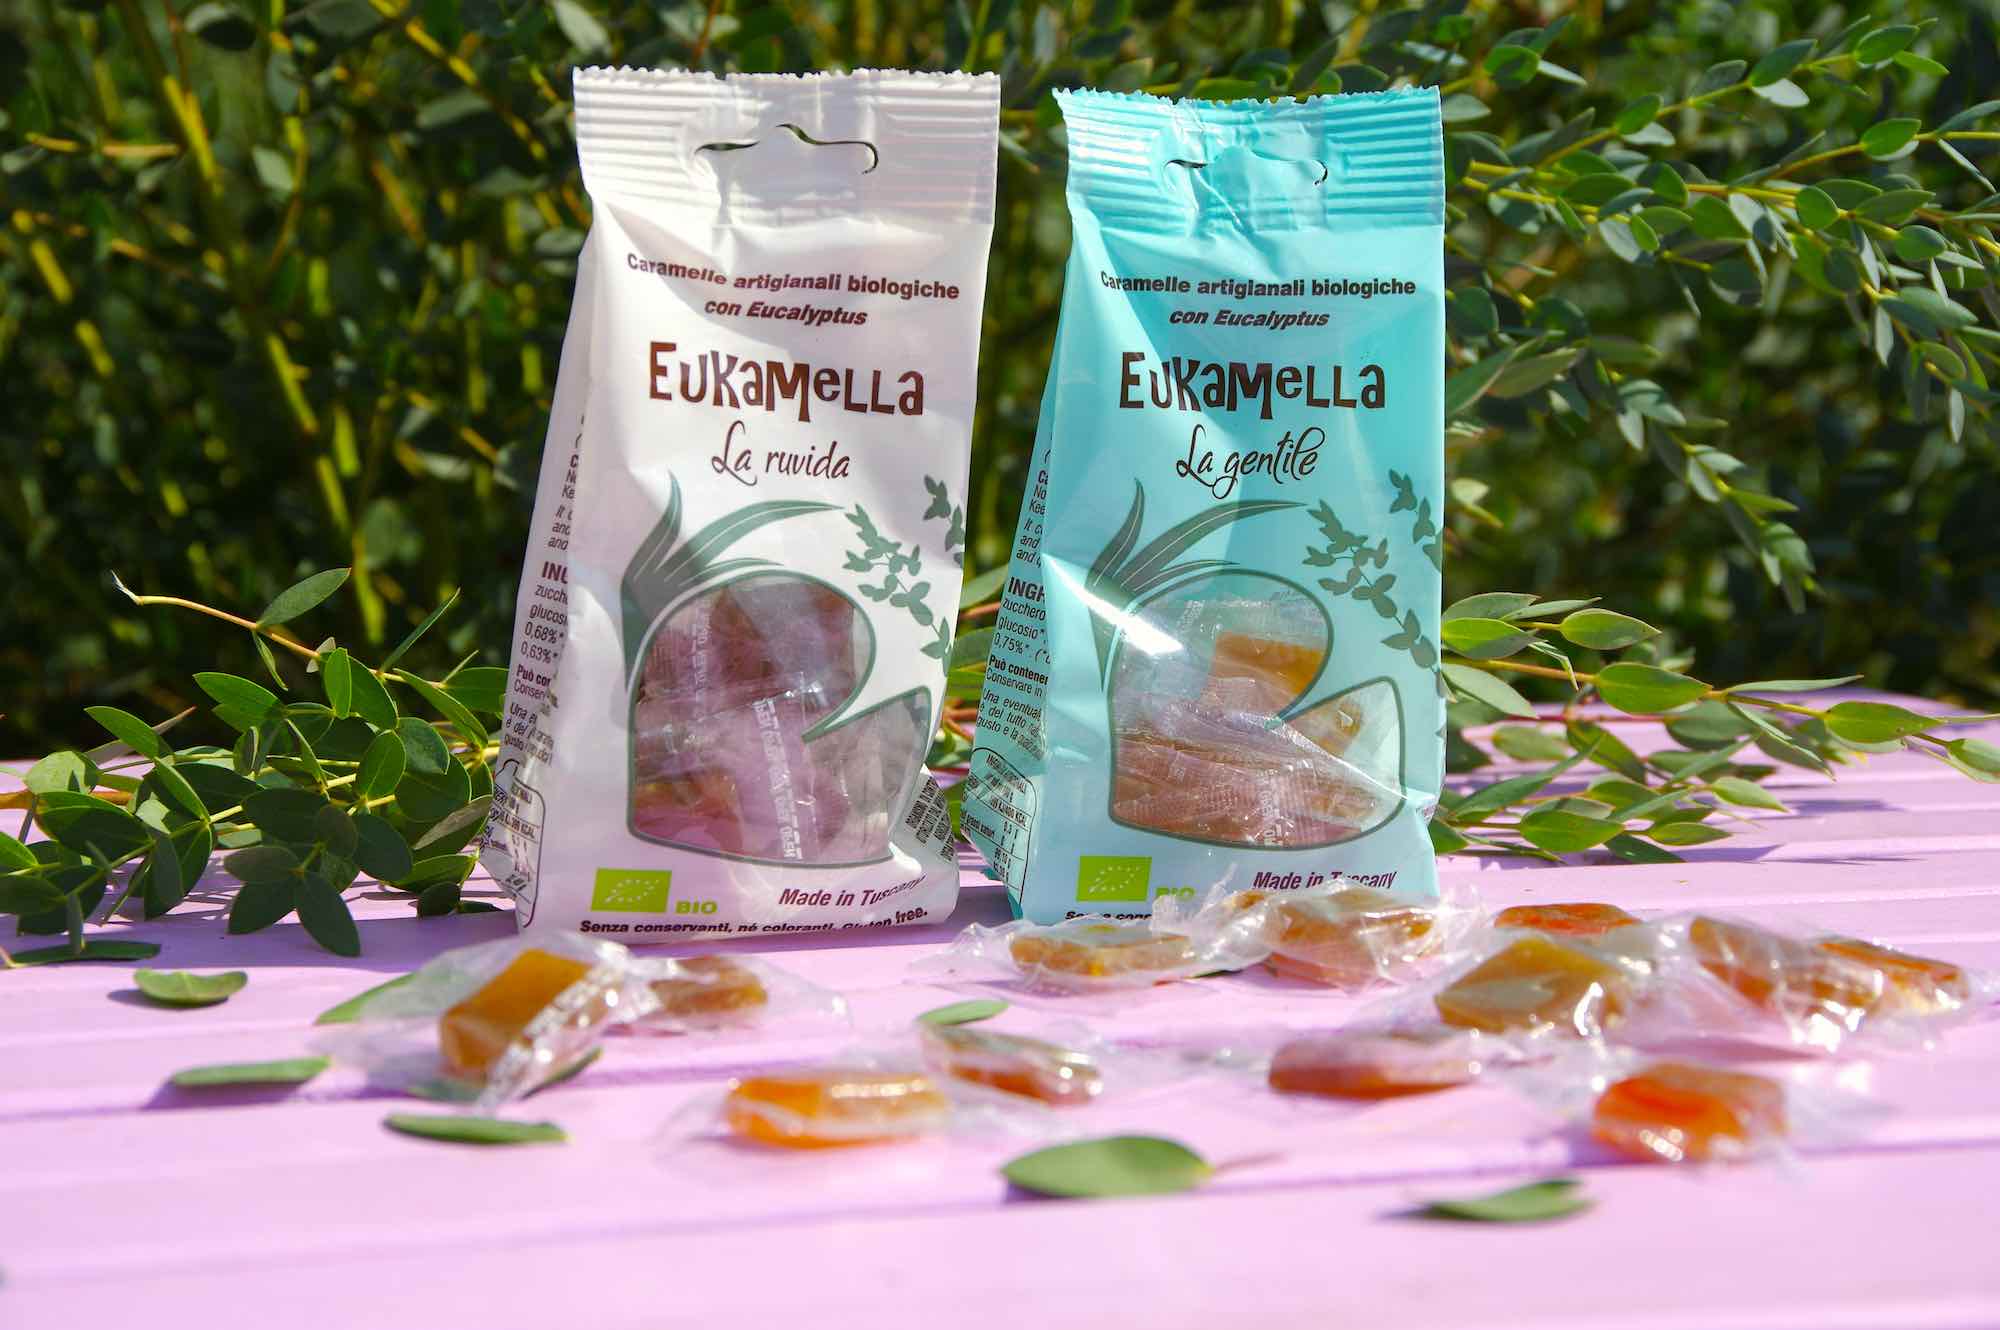 Eukamella, le caramelle all'eucalipto dell'azienda biologica toscana Oligea